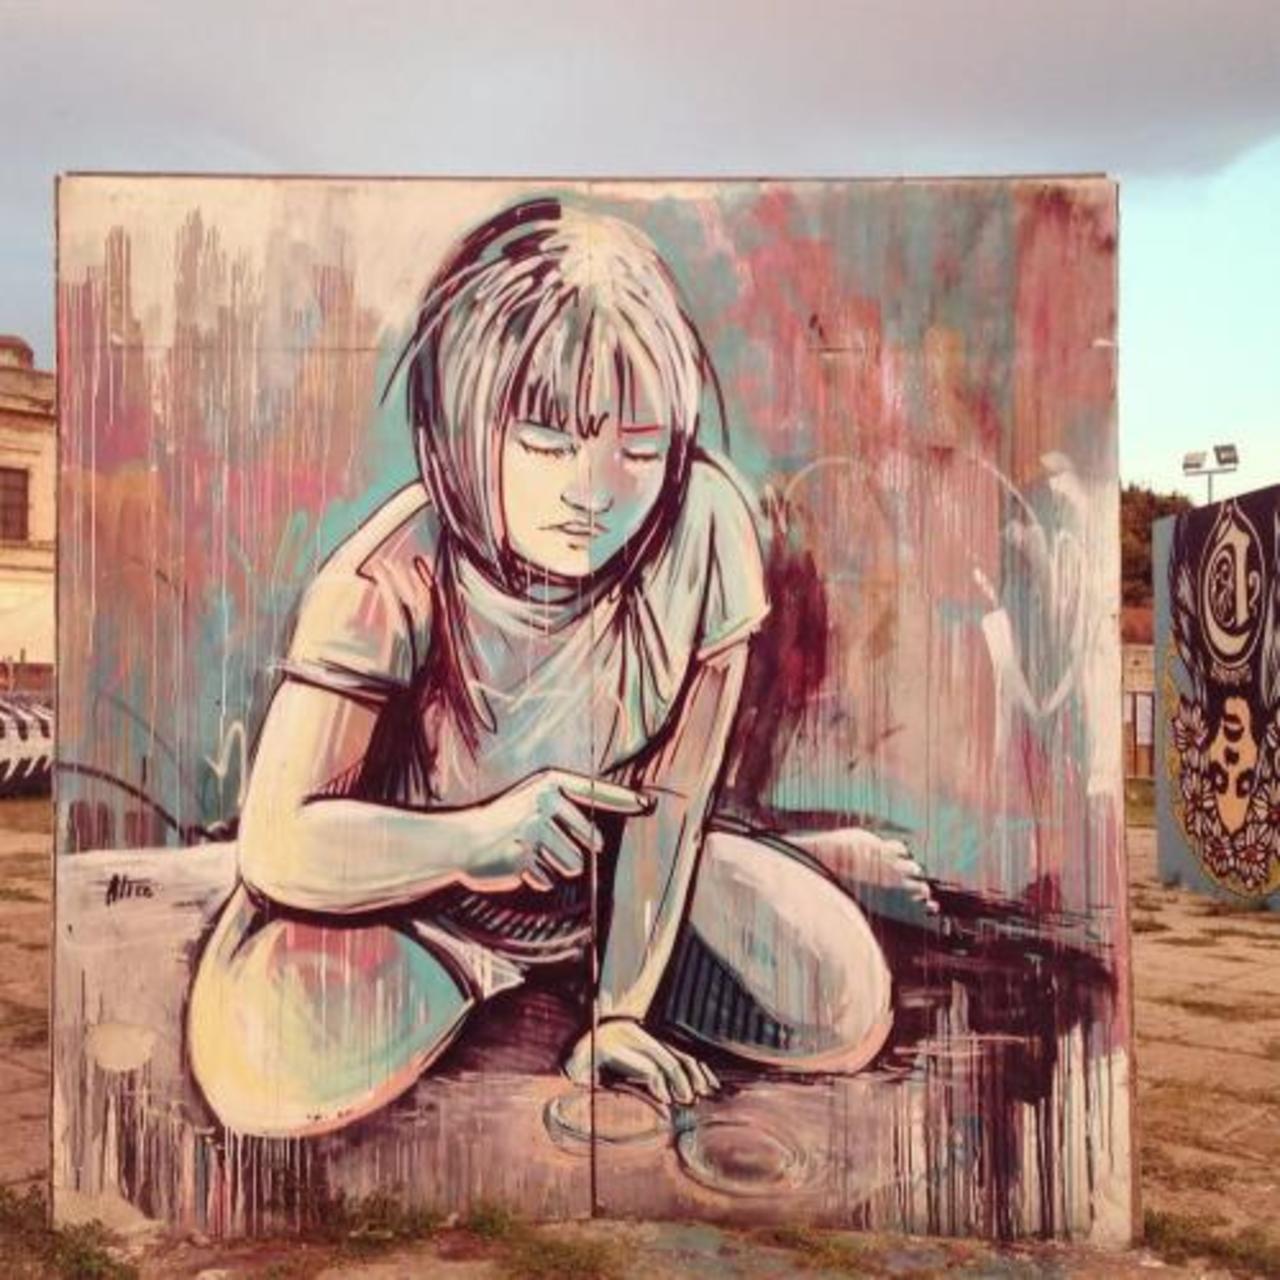 #Alice 
_
#streetart #art #murales #graffiti #painting #street... http://ift.tt/1jncL5o #alicepasquini http://t.co/hdP2doqXqn